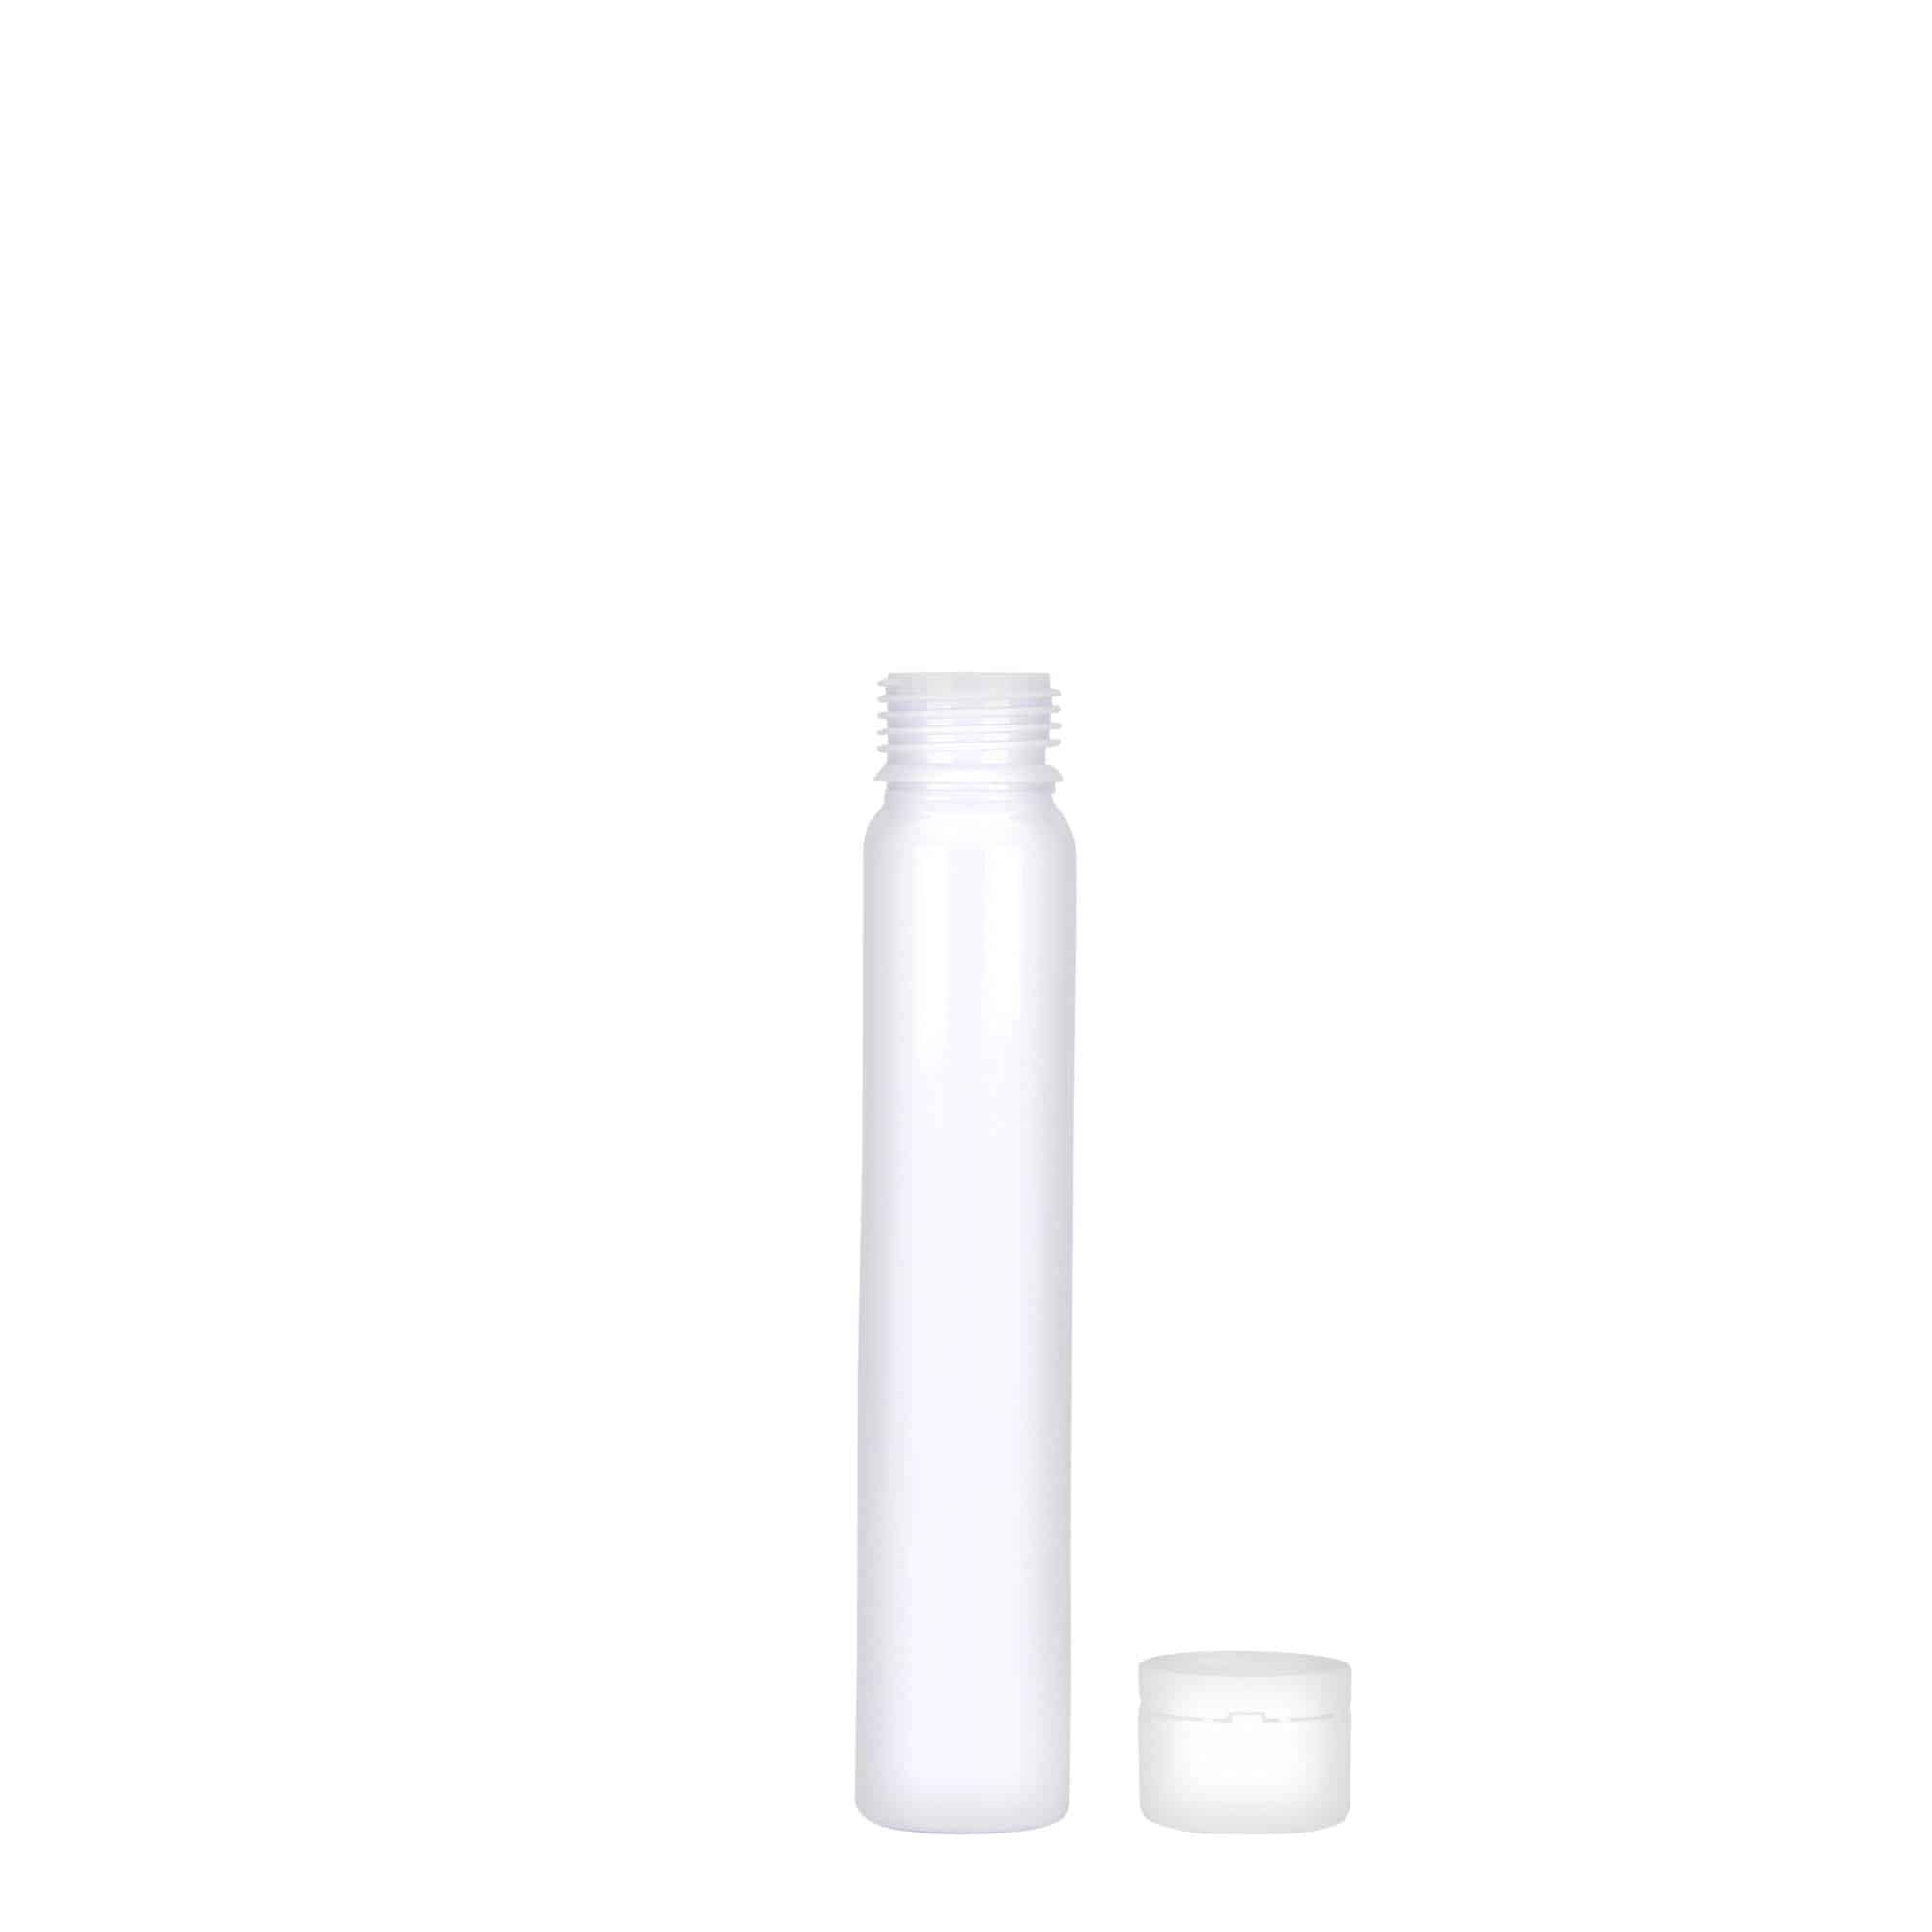 PET trubička 25 ml, plast, bílá, uzávěr: šroubovací uzávěr